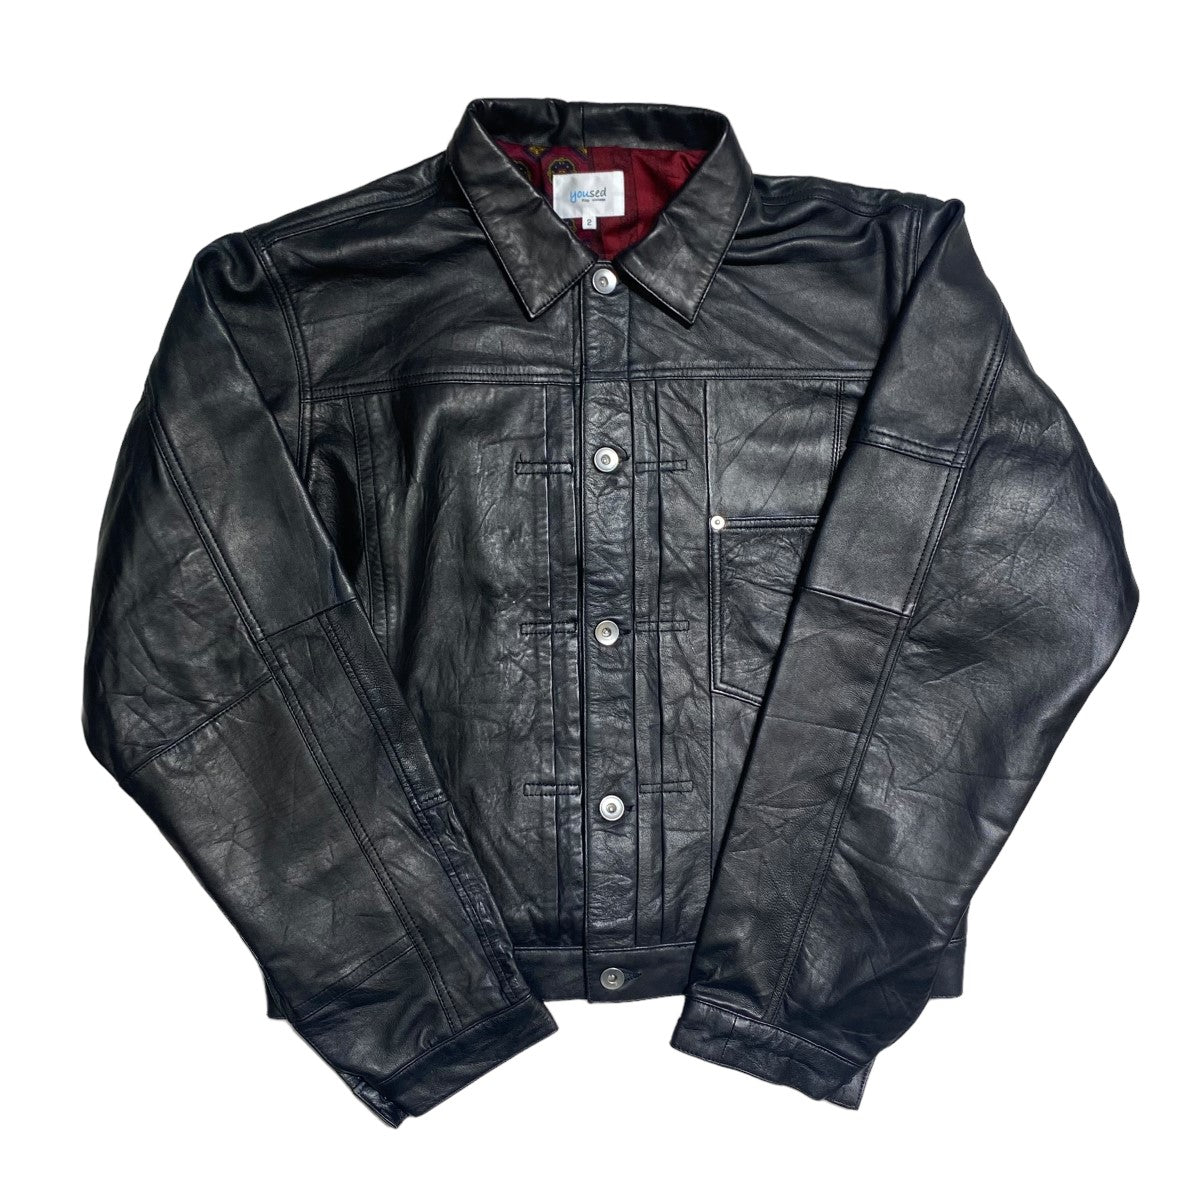 yoused(ユーズド) 1st Type Leather Jacket レザージャケット ブラック ...